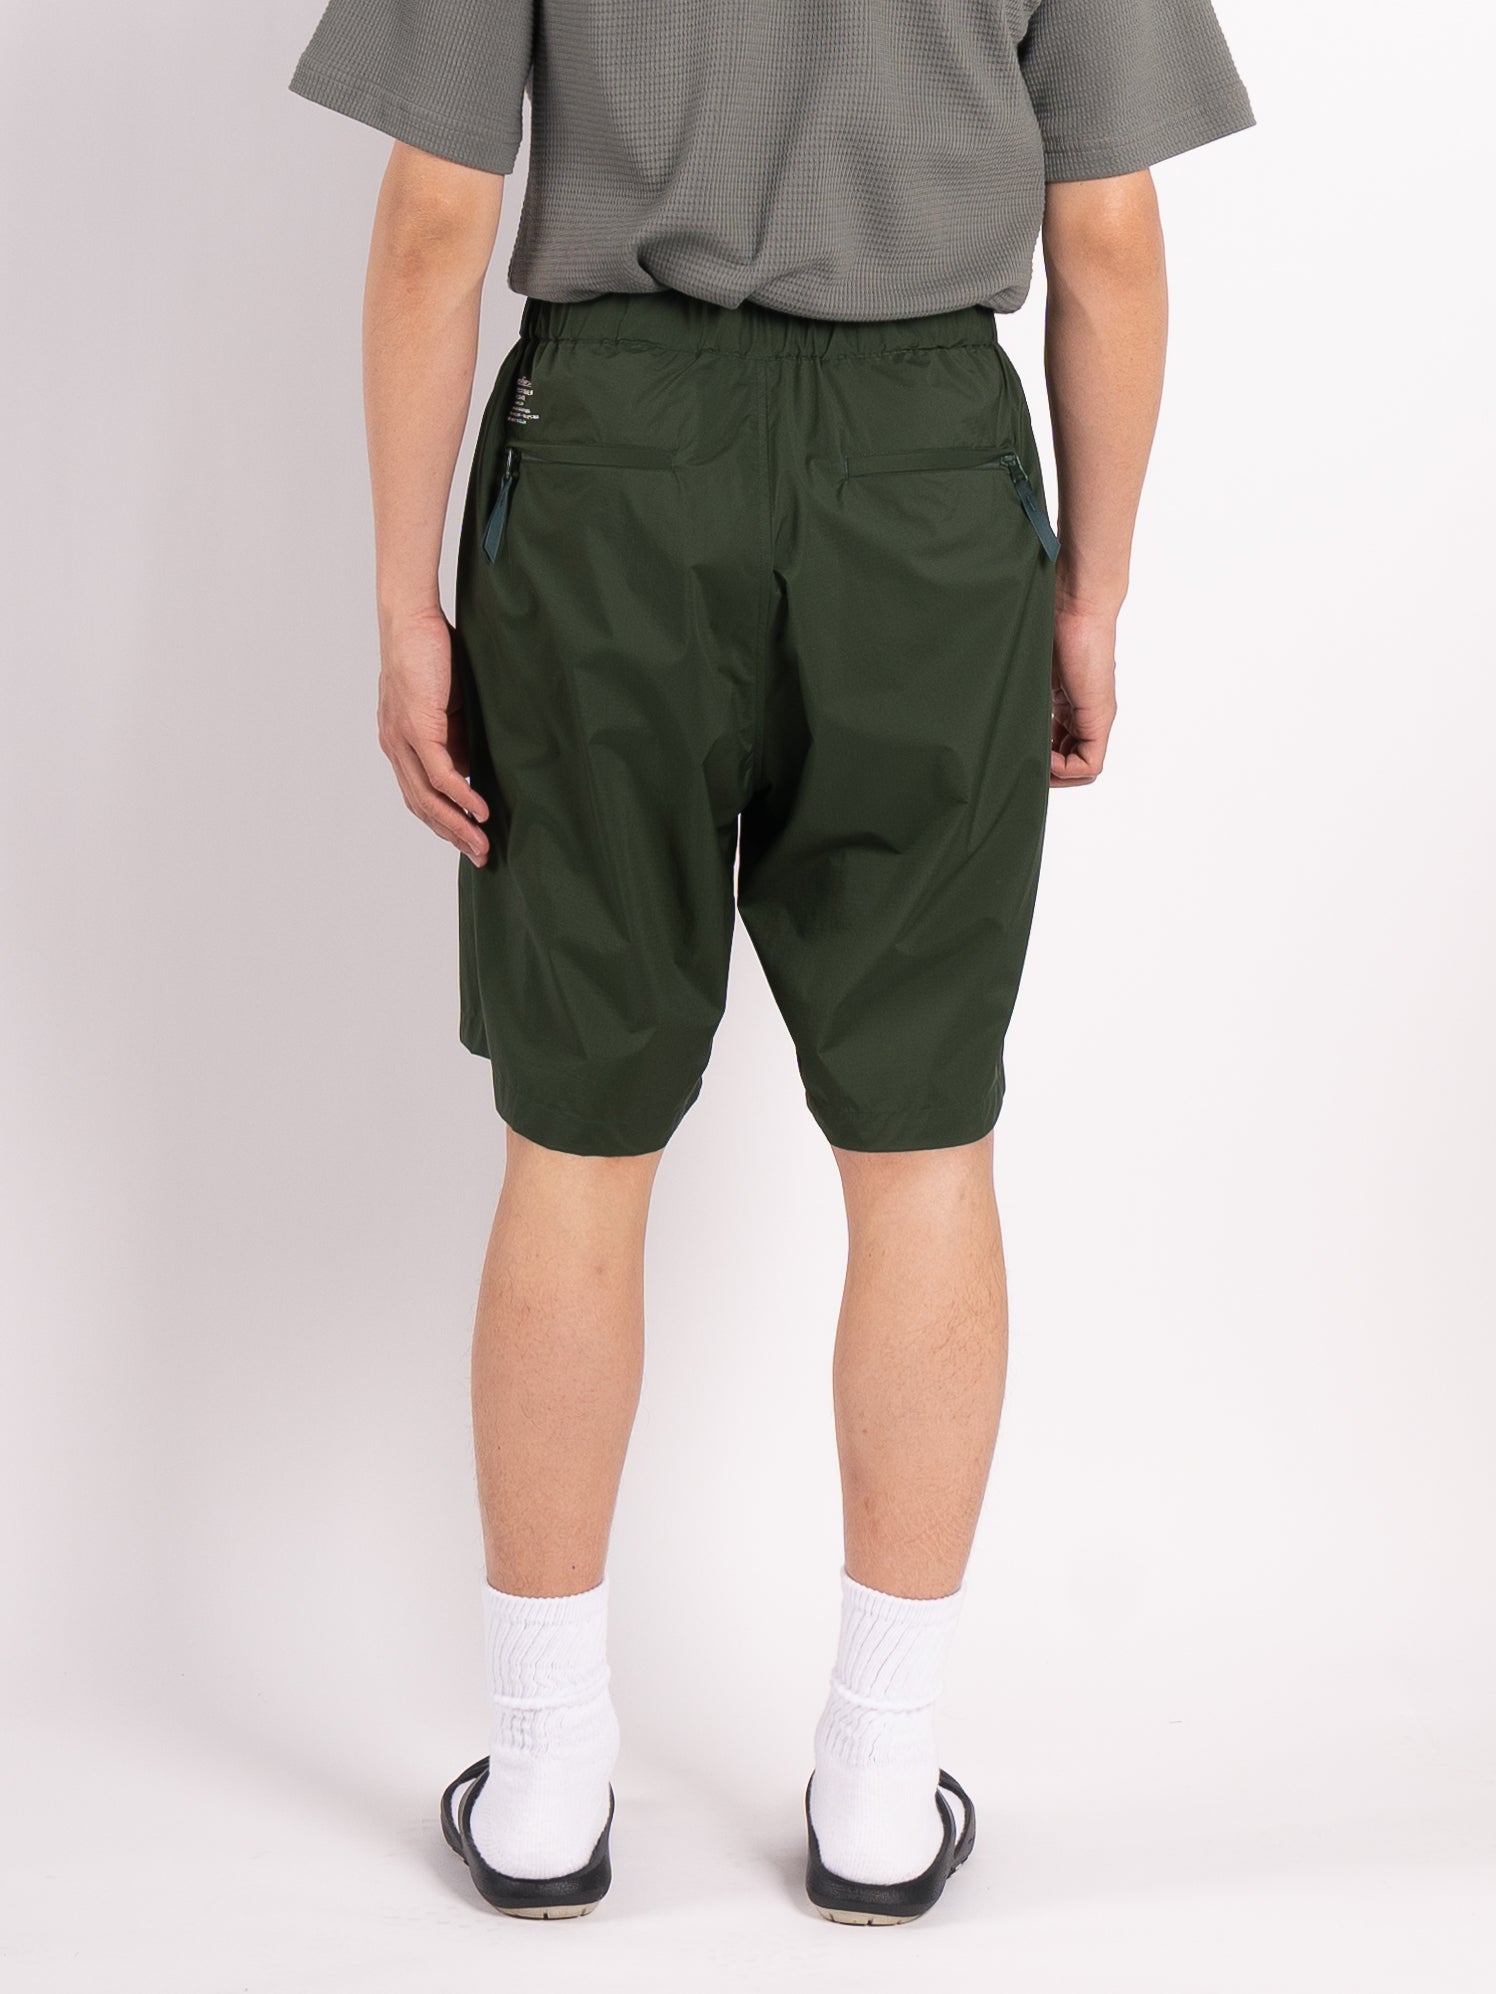 FreshService PERTEX Equilibrium Tech Shorts (Green)